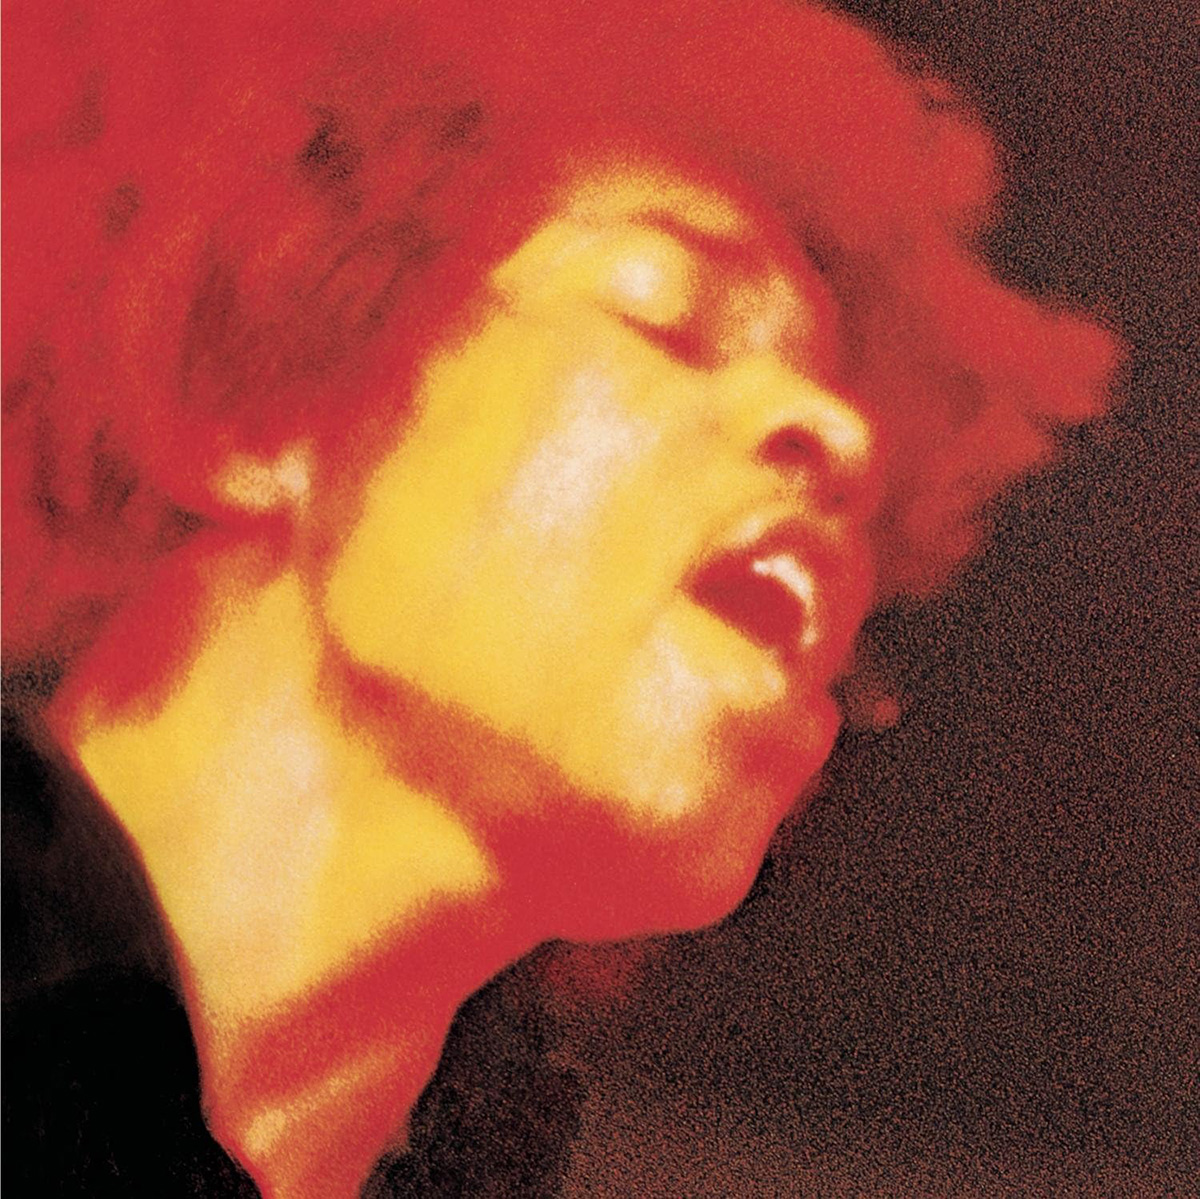 Electric Ladyland Jimi Hendrix Album cover